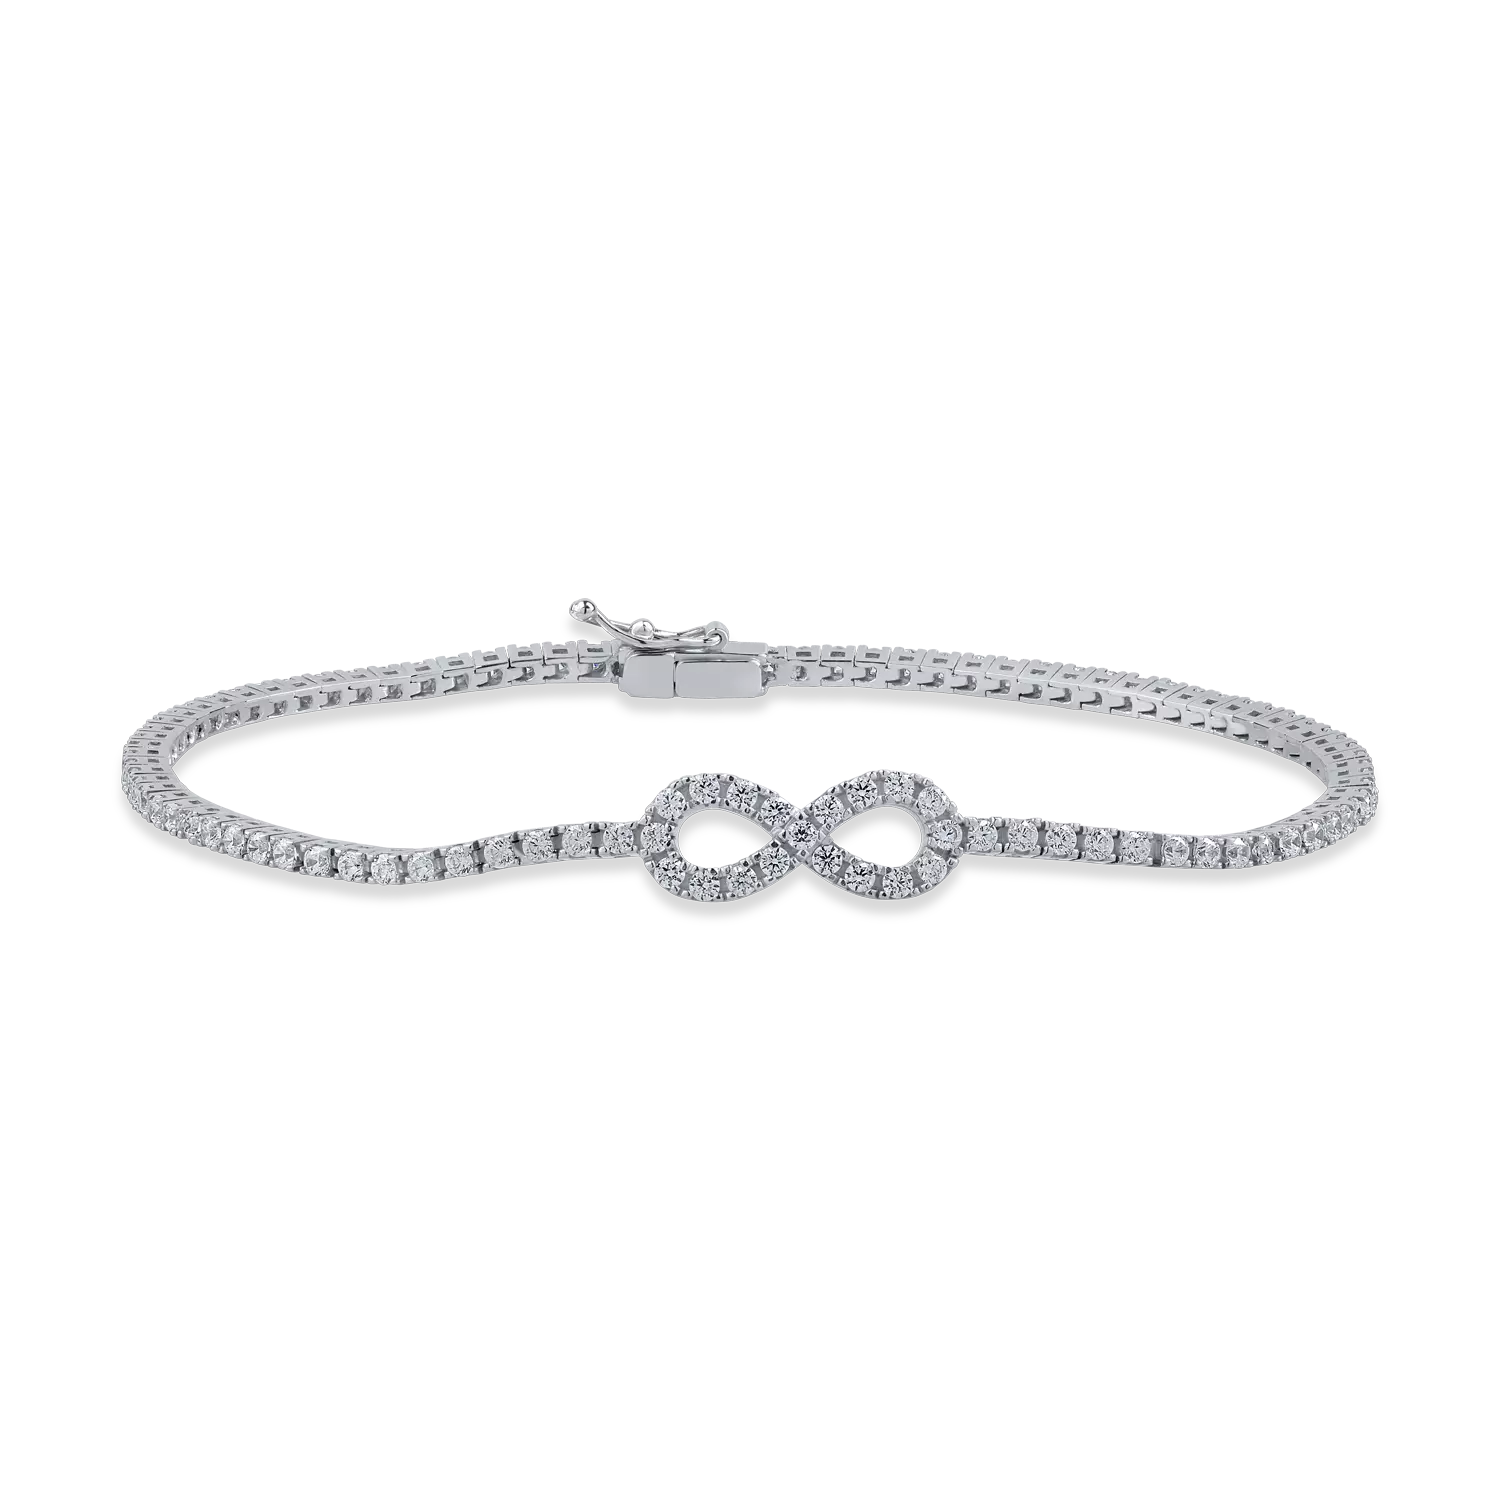 White gold infinity charm bracelet with zirconia